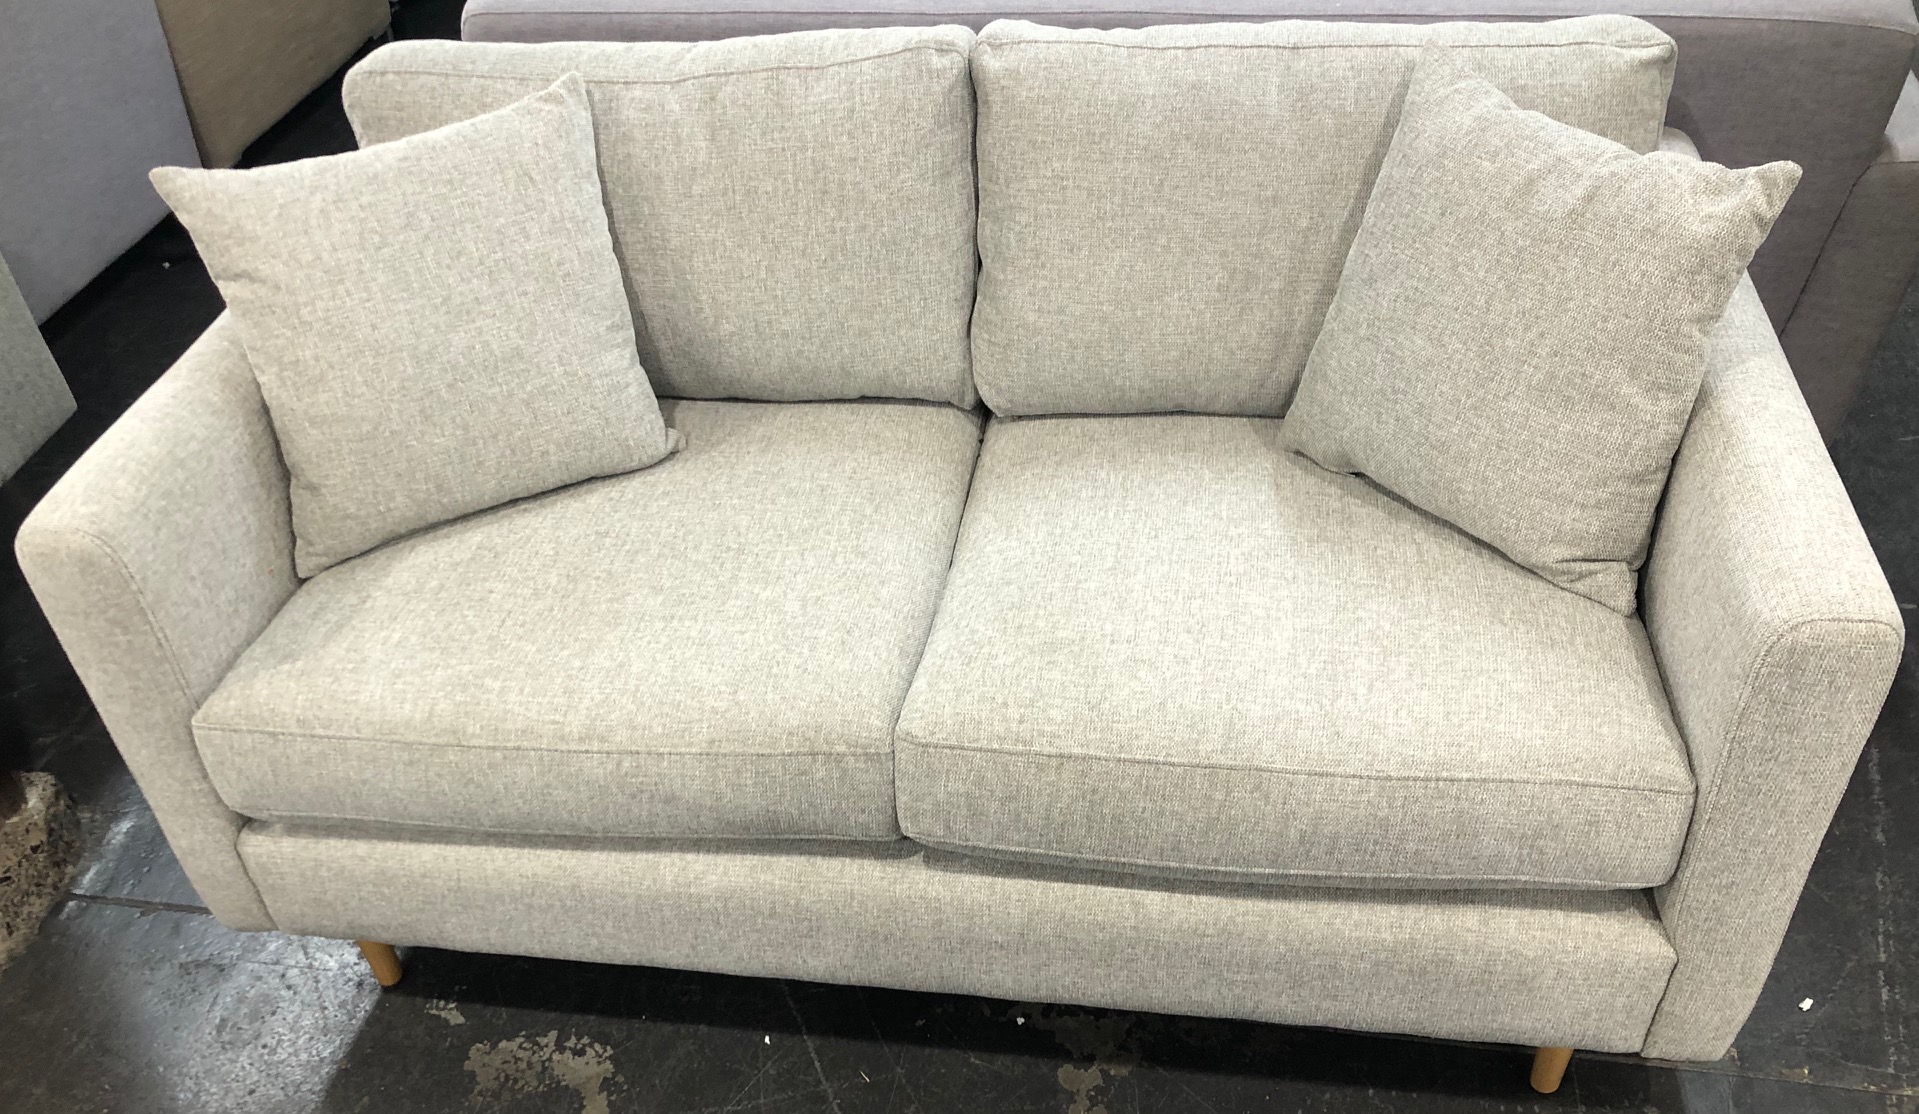 Sofa 3 Seater York In Belfast Grey W2300 x D910 x H840mm